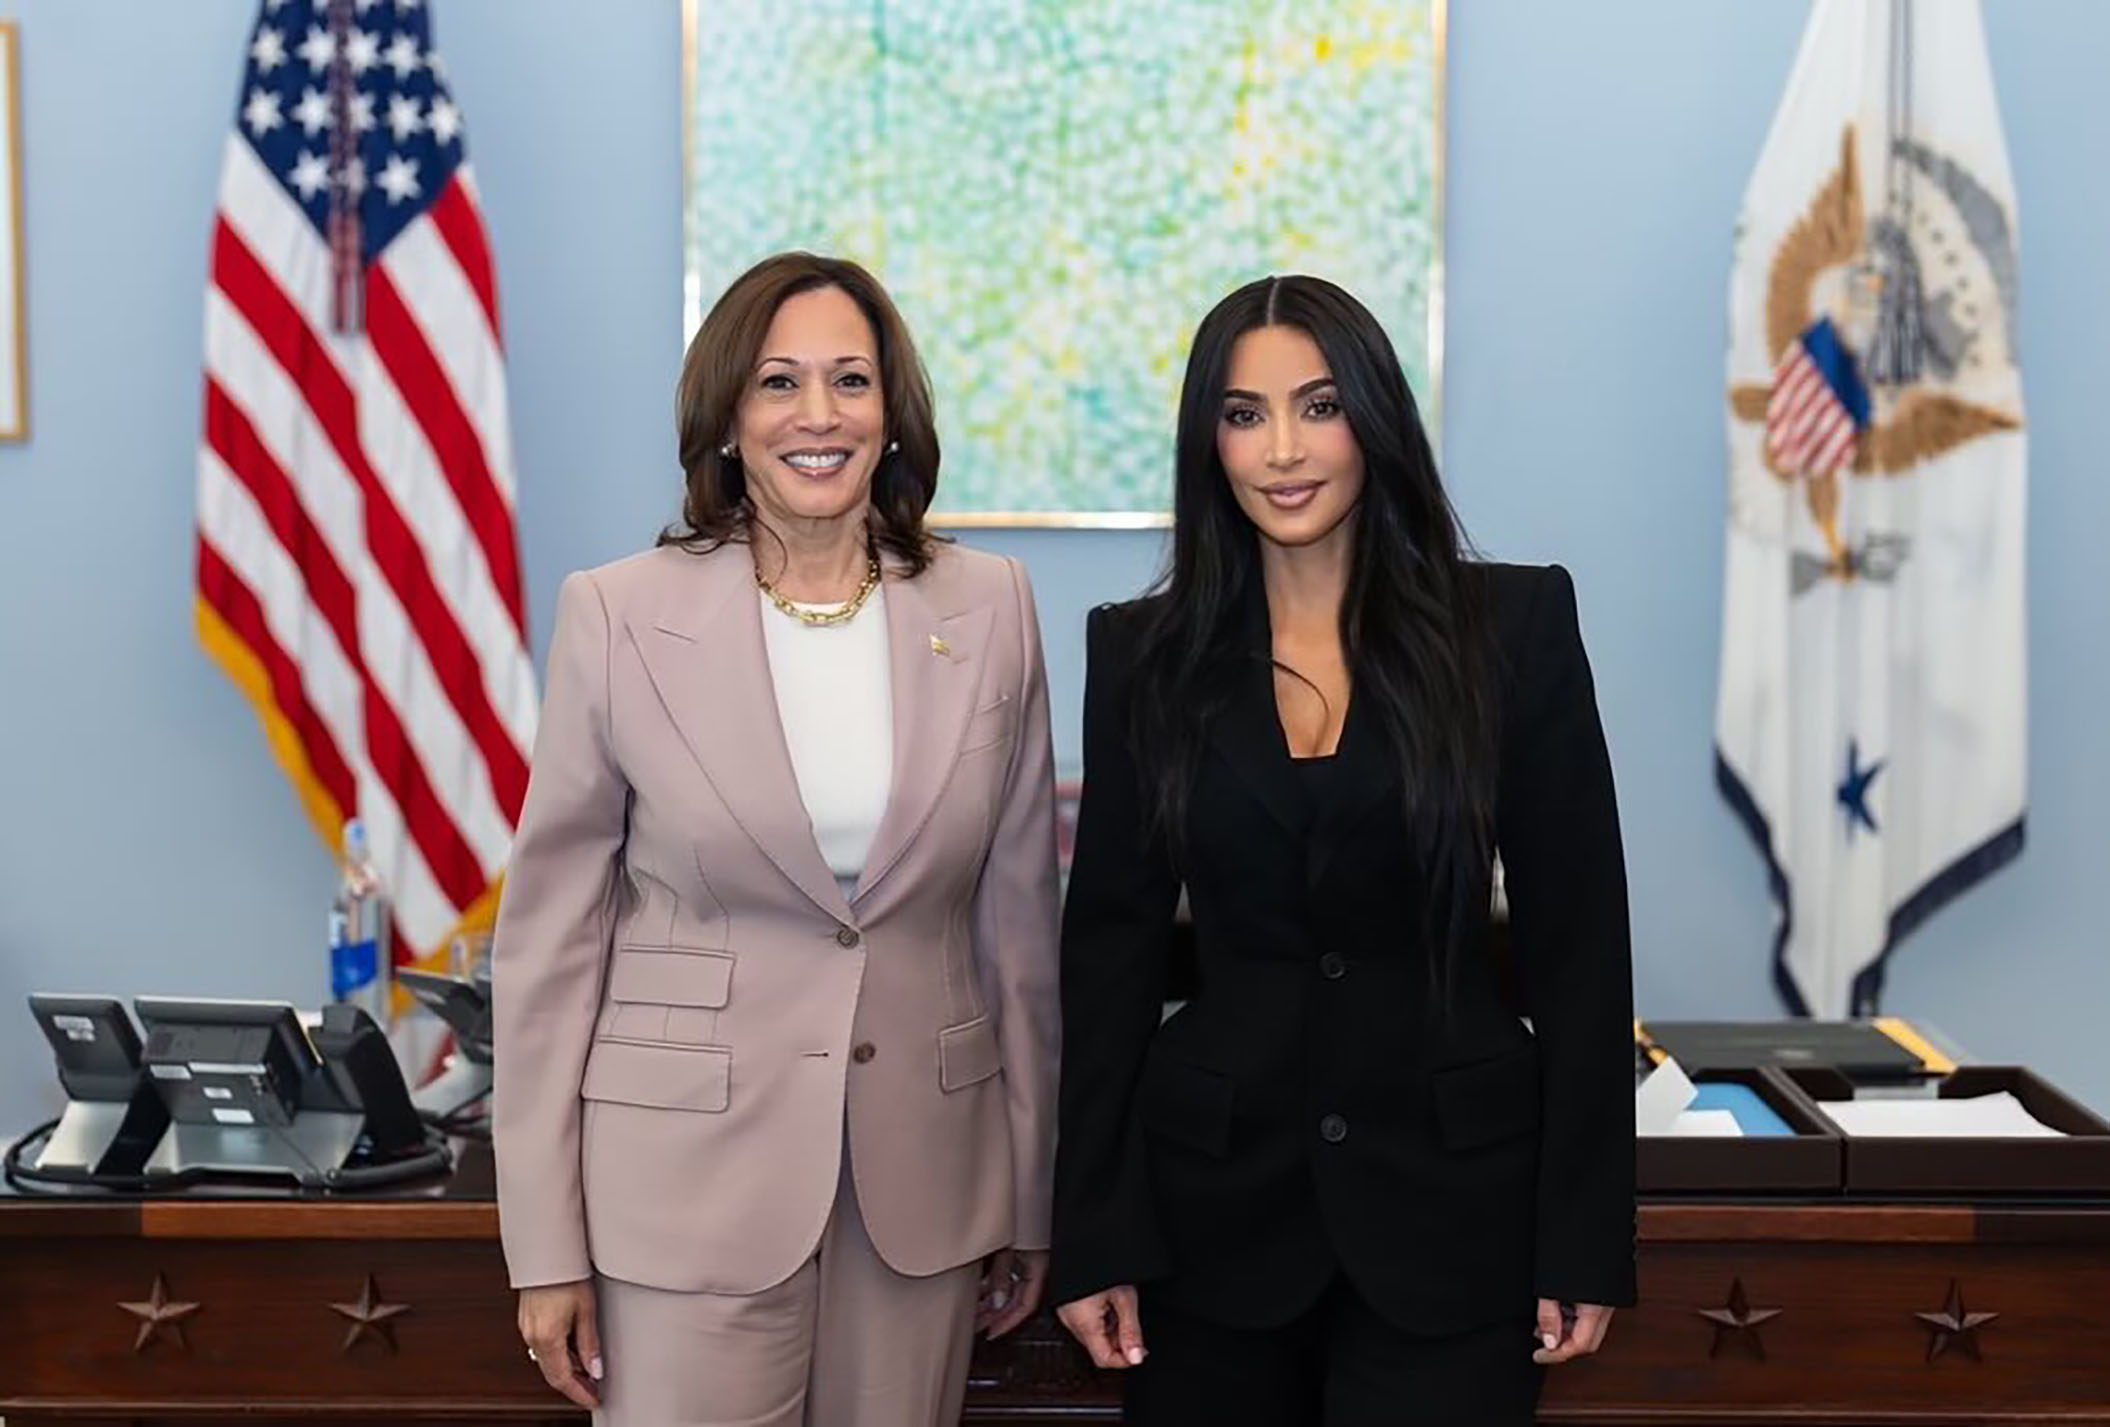 Kim Kardashian was last seen with dark hair when she met Vice President Kamala Harris at the White House